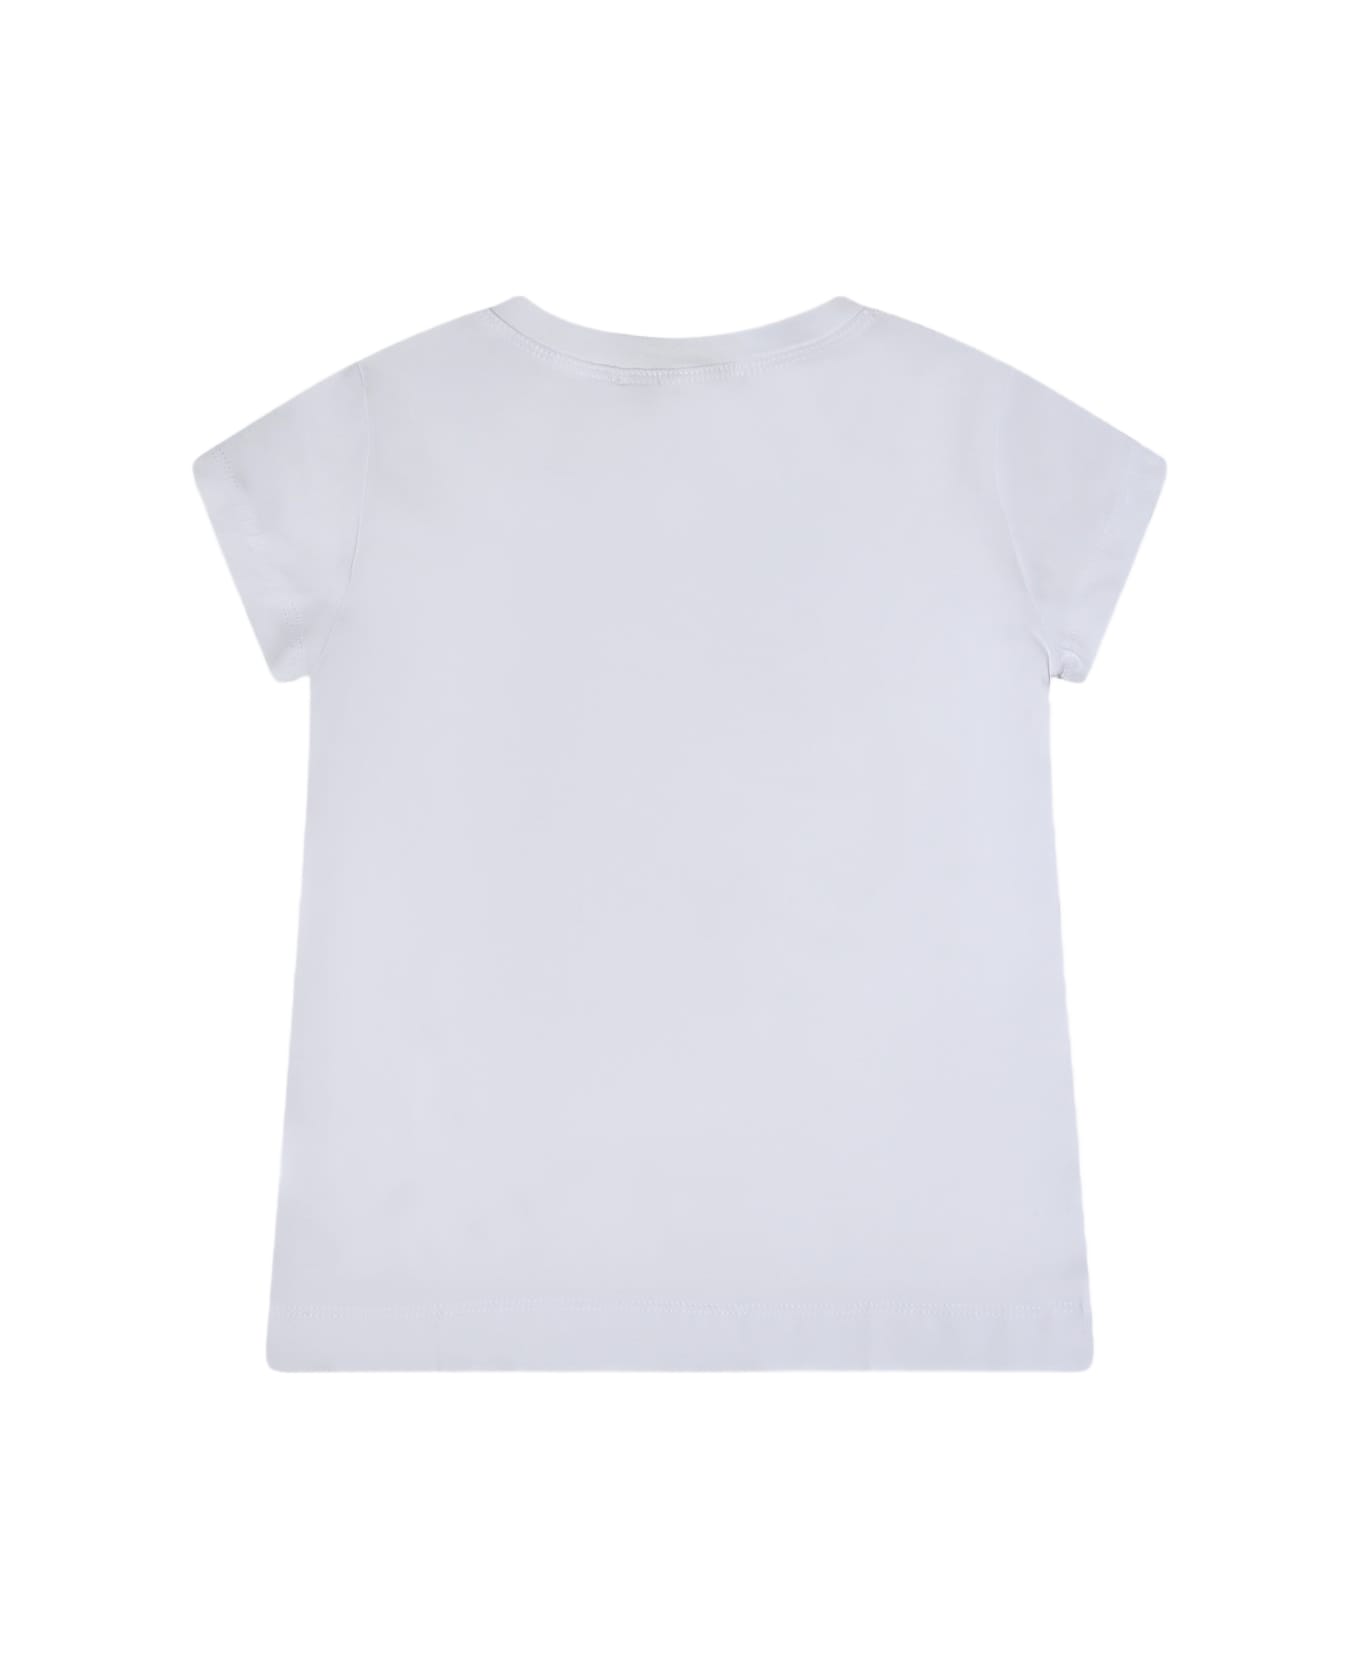 Monnalisa White Cotton T-shirt - White